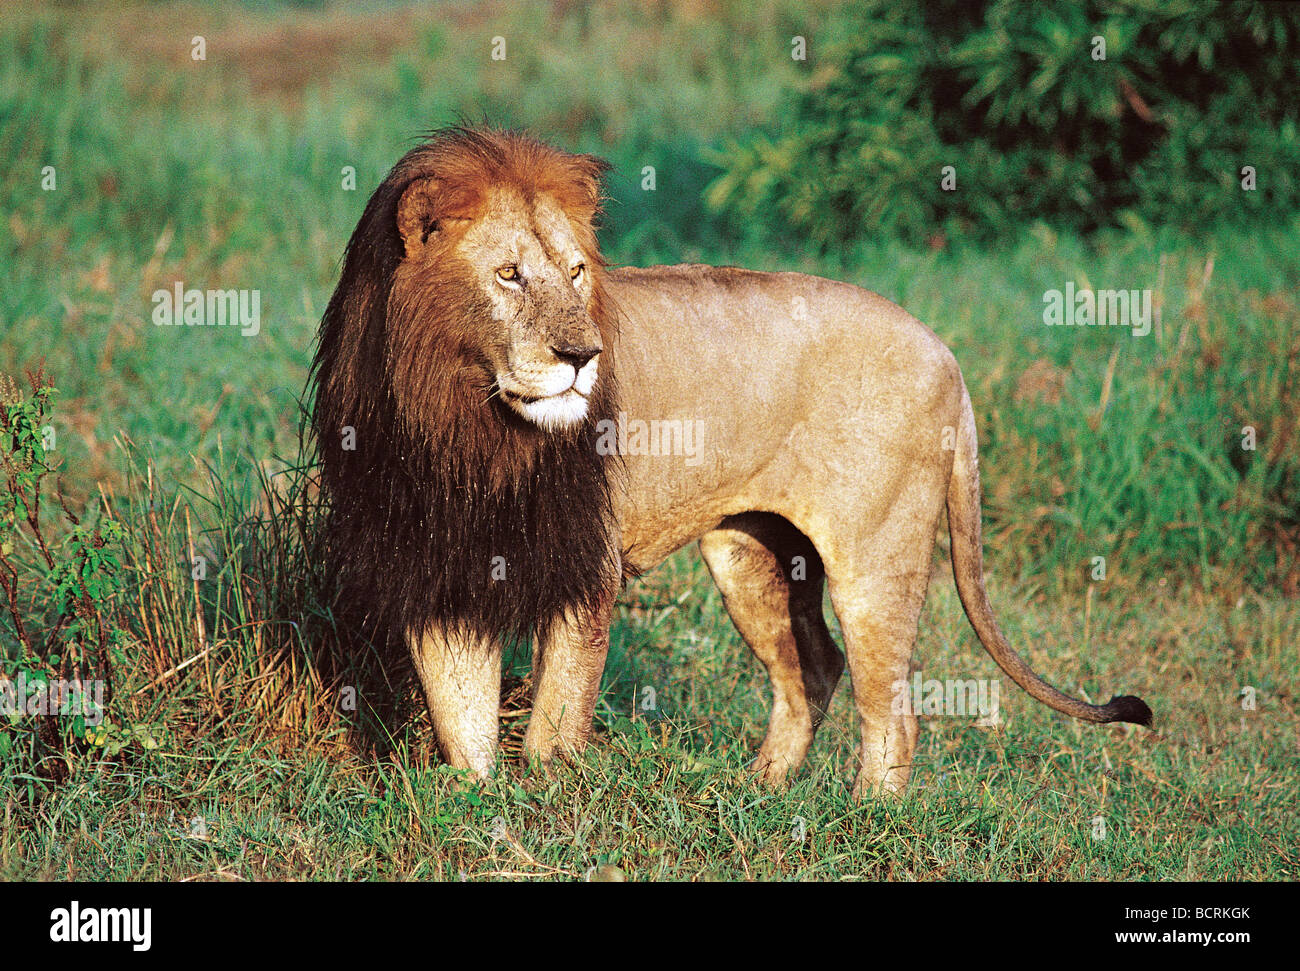 Reifen männlichen Löwen mit schwarzen Mähne Serengeti Nationalpark Tansania Ostafrika Stockfoto